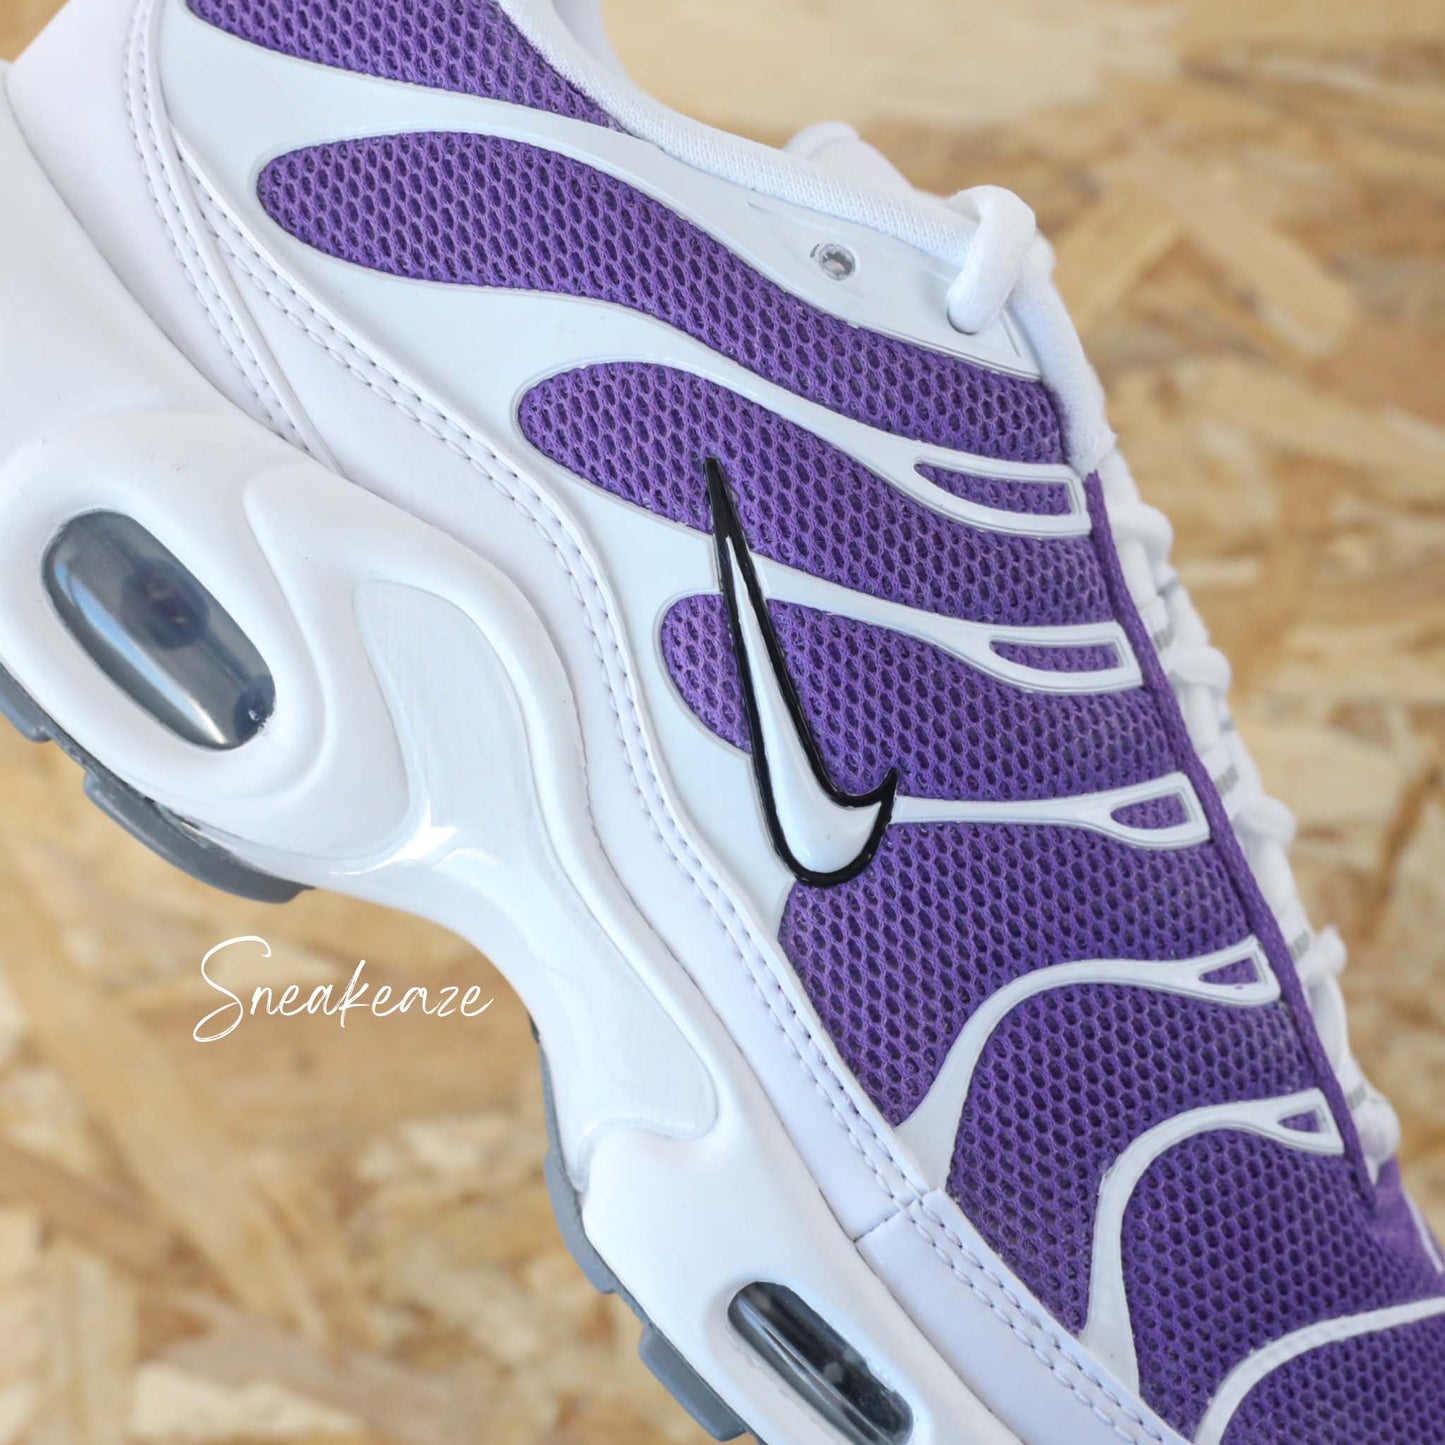 Baskets Nike Air Max Plus (TN) custom violet - sneakeaze custom